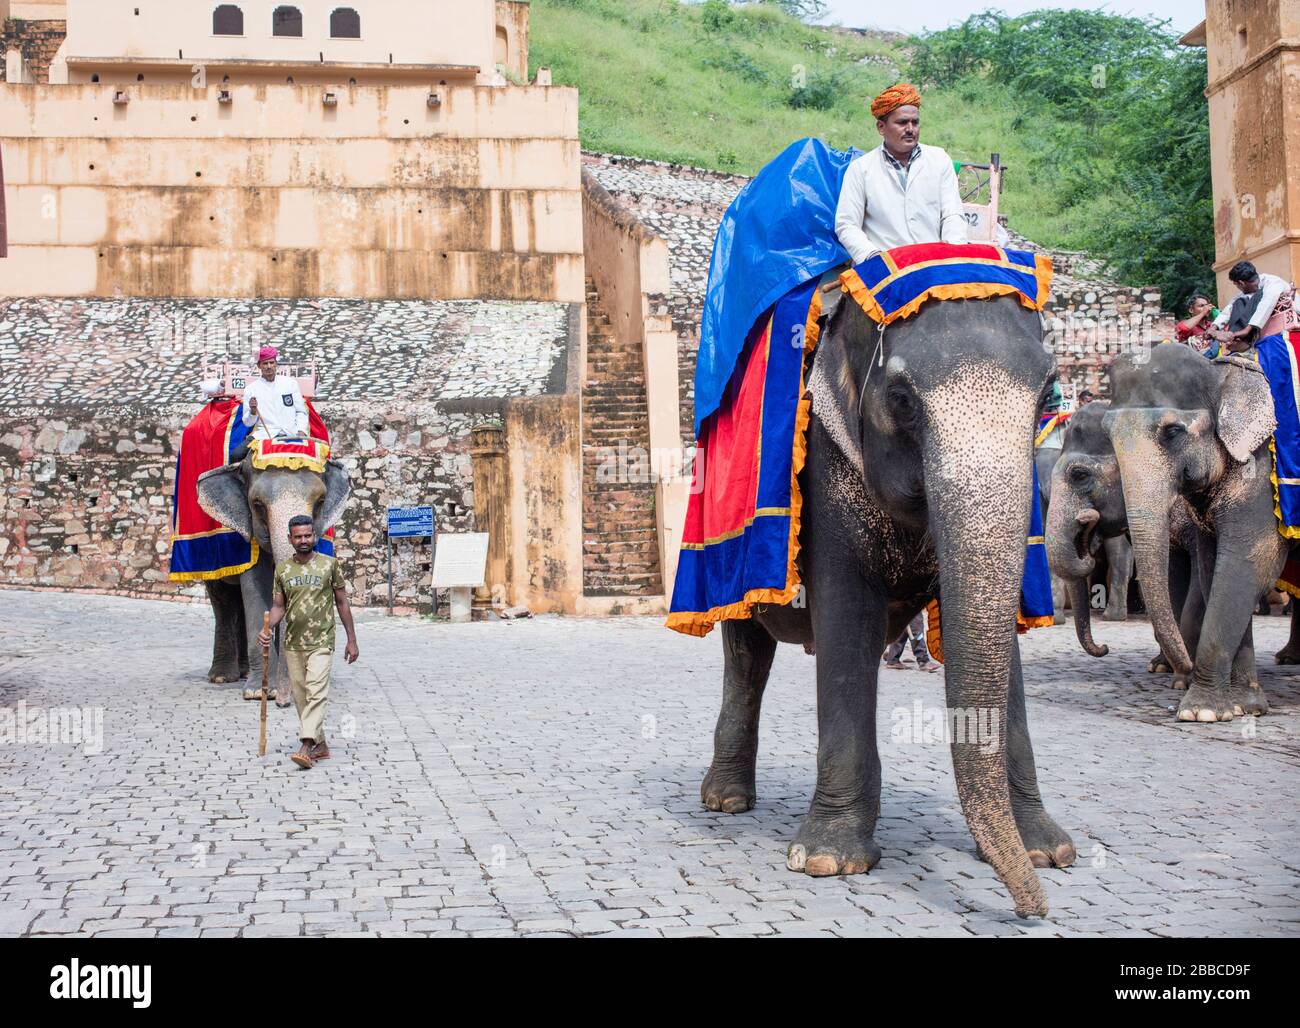 Elephants at Amer Fort, Jaipur, Rajasthan, India Stock Photo